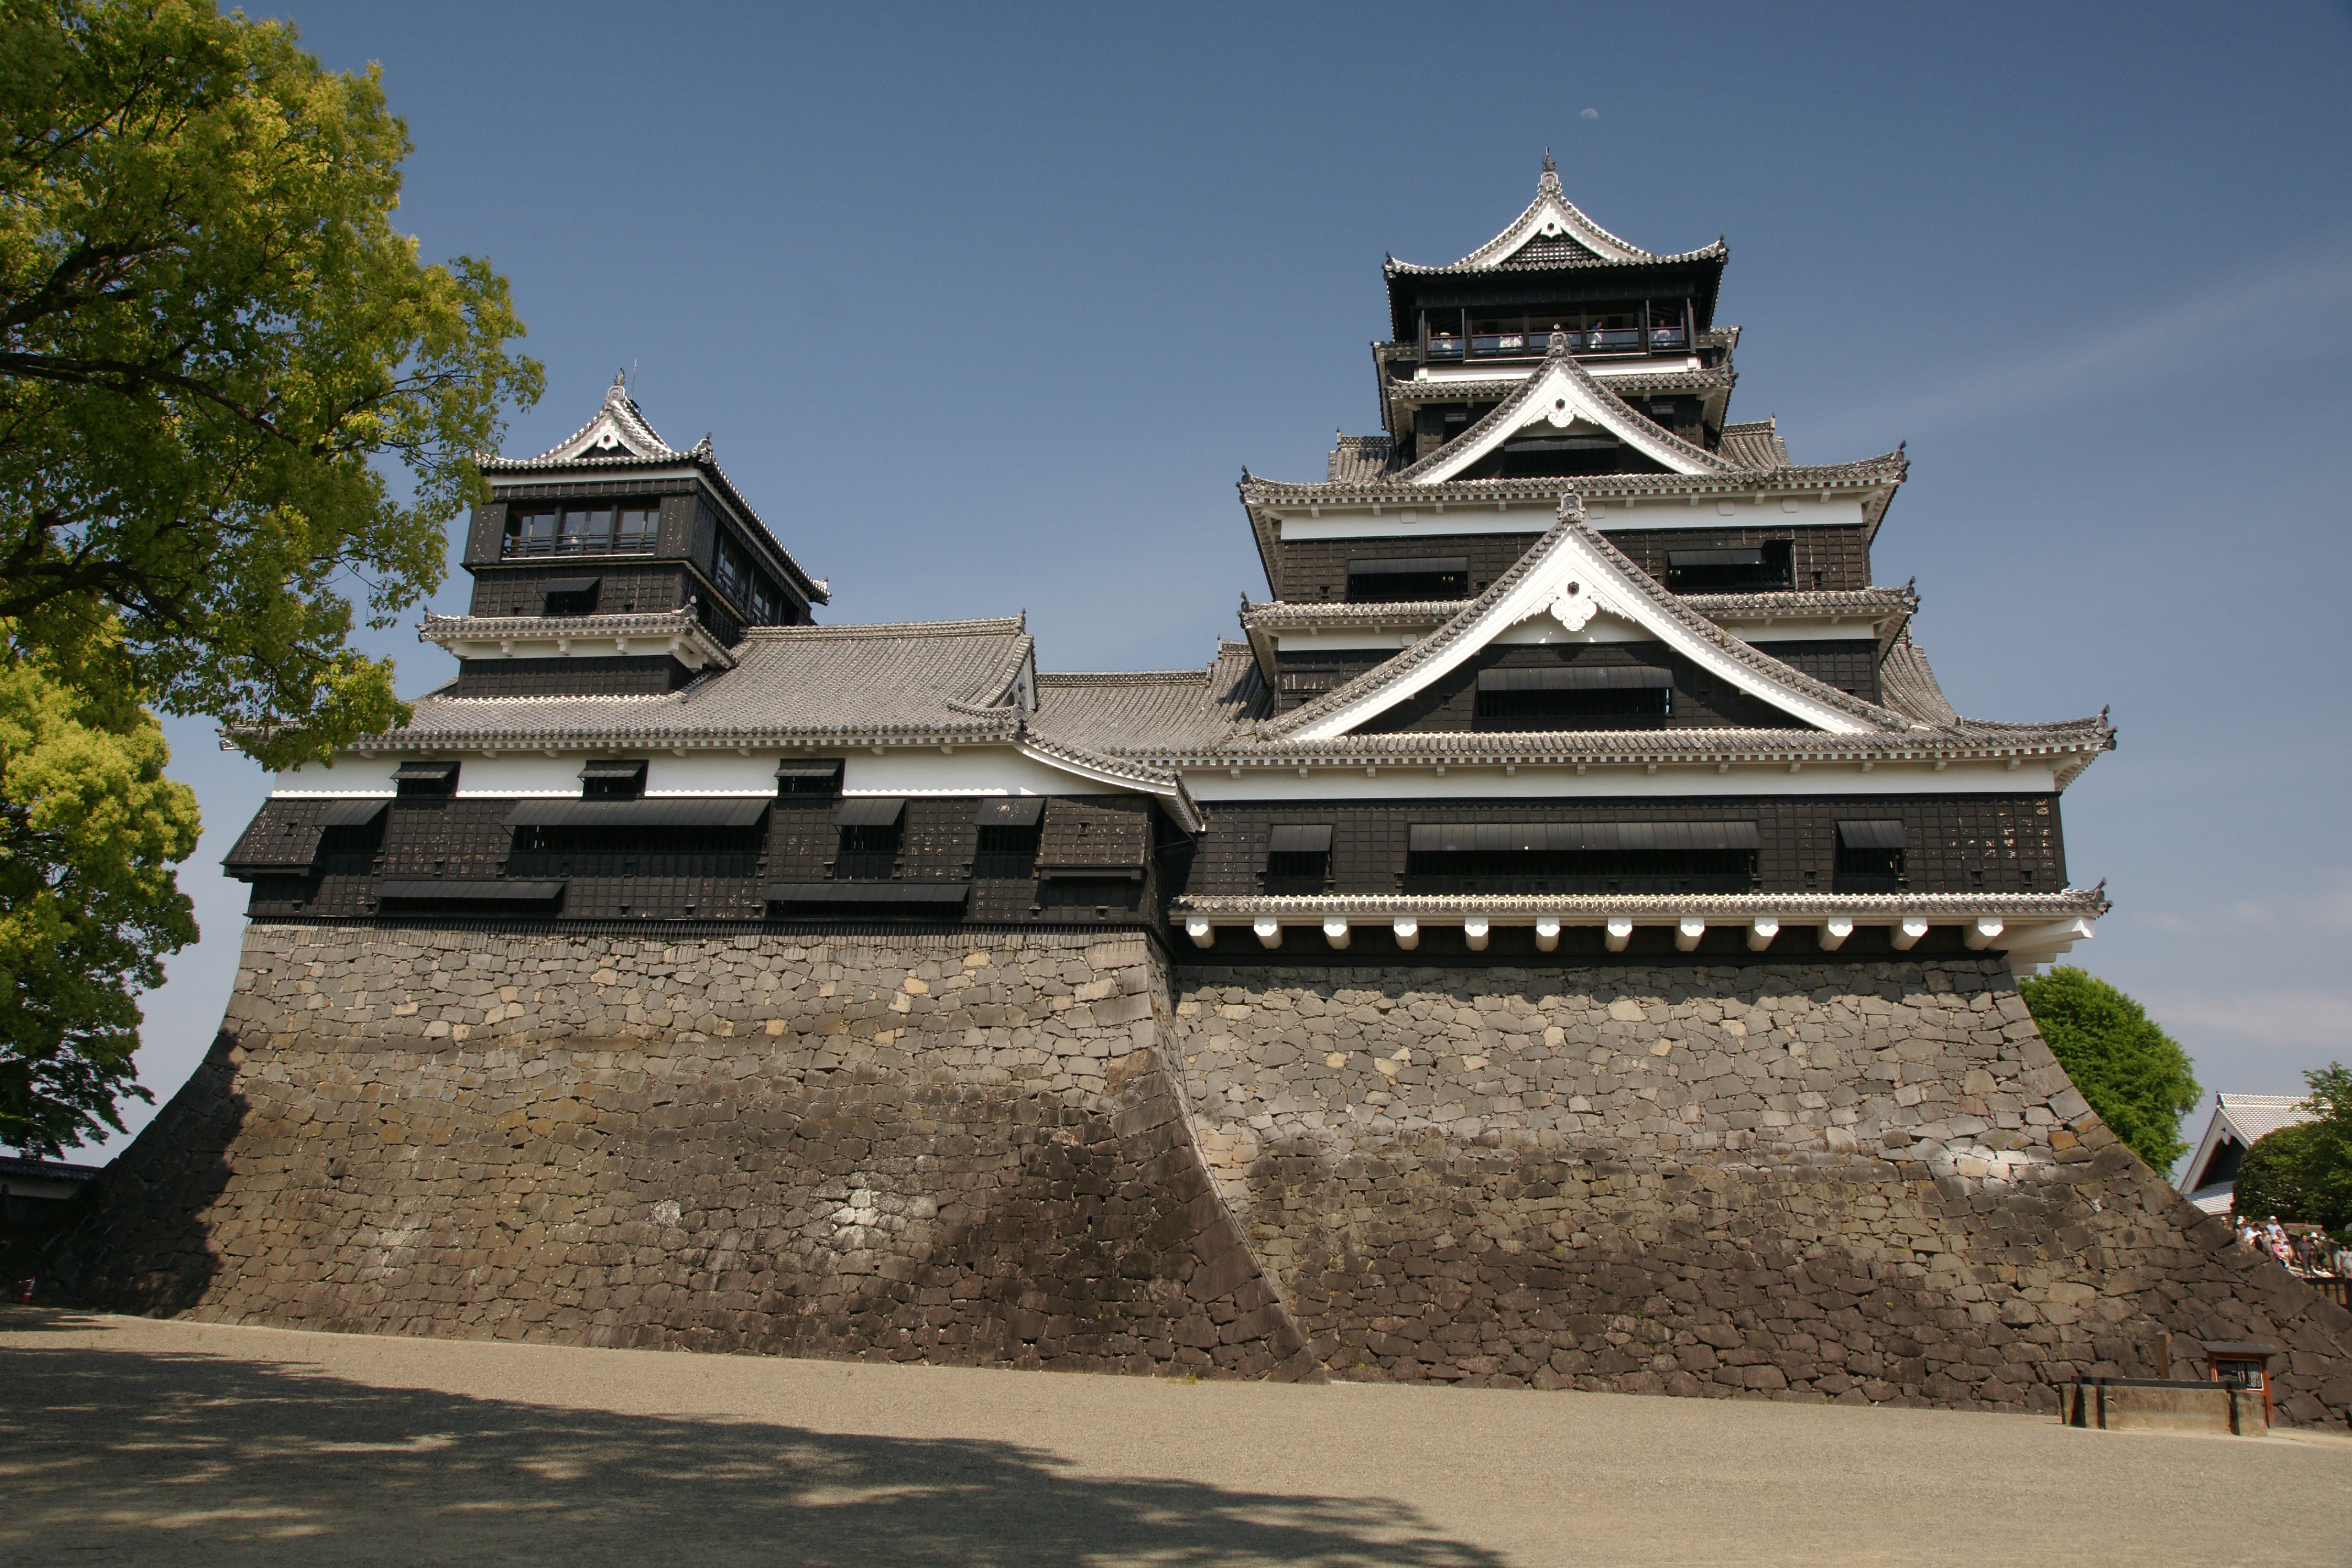 Most impressive Japan castle